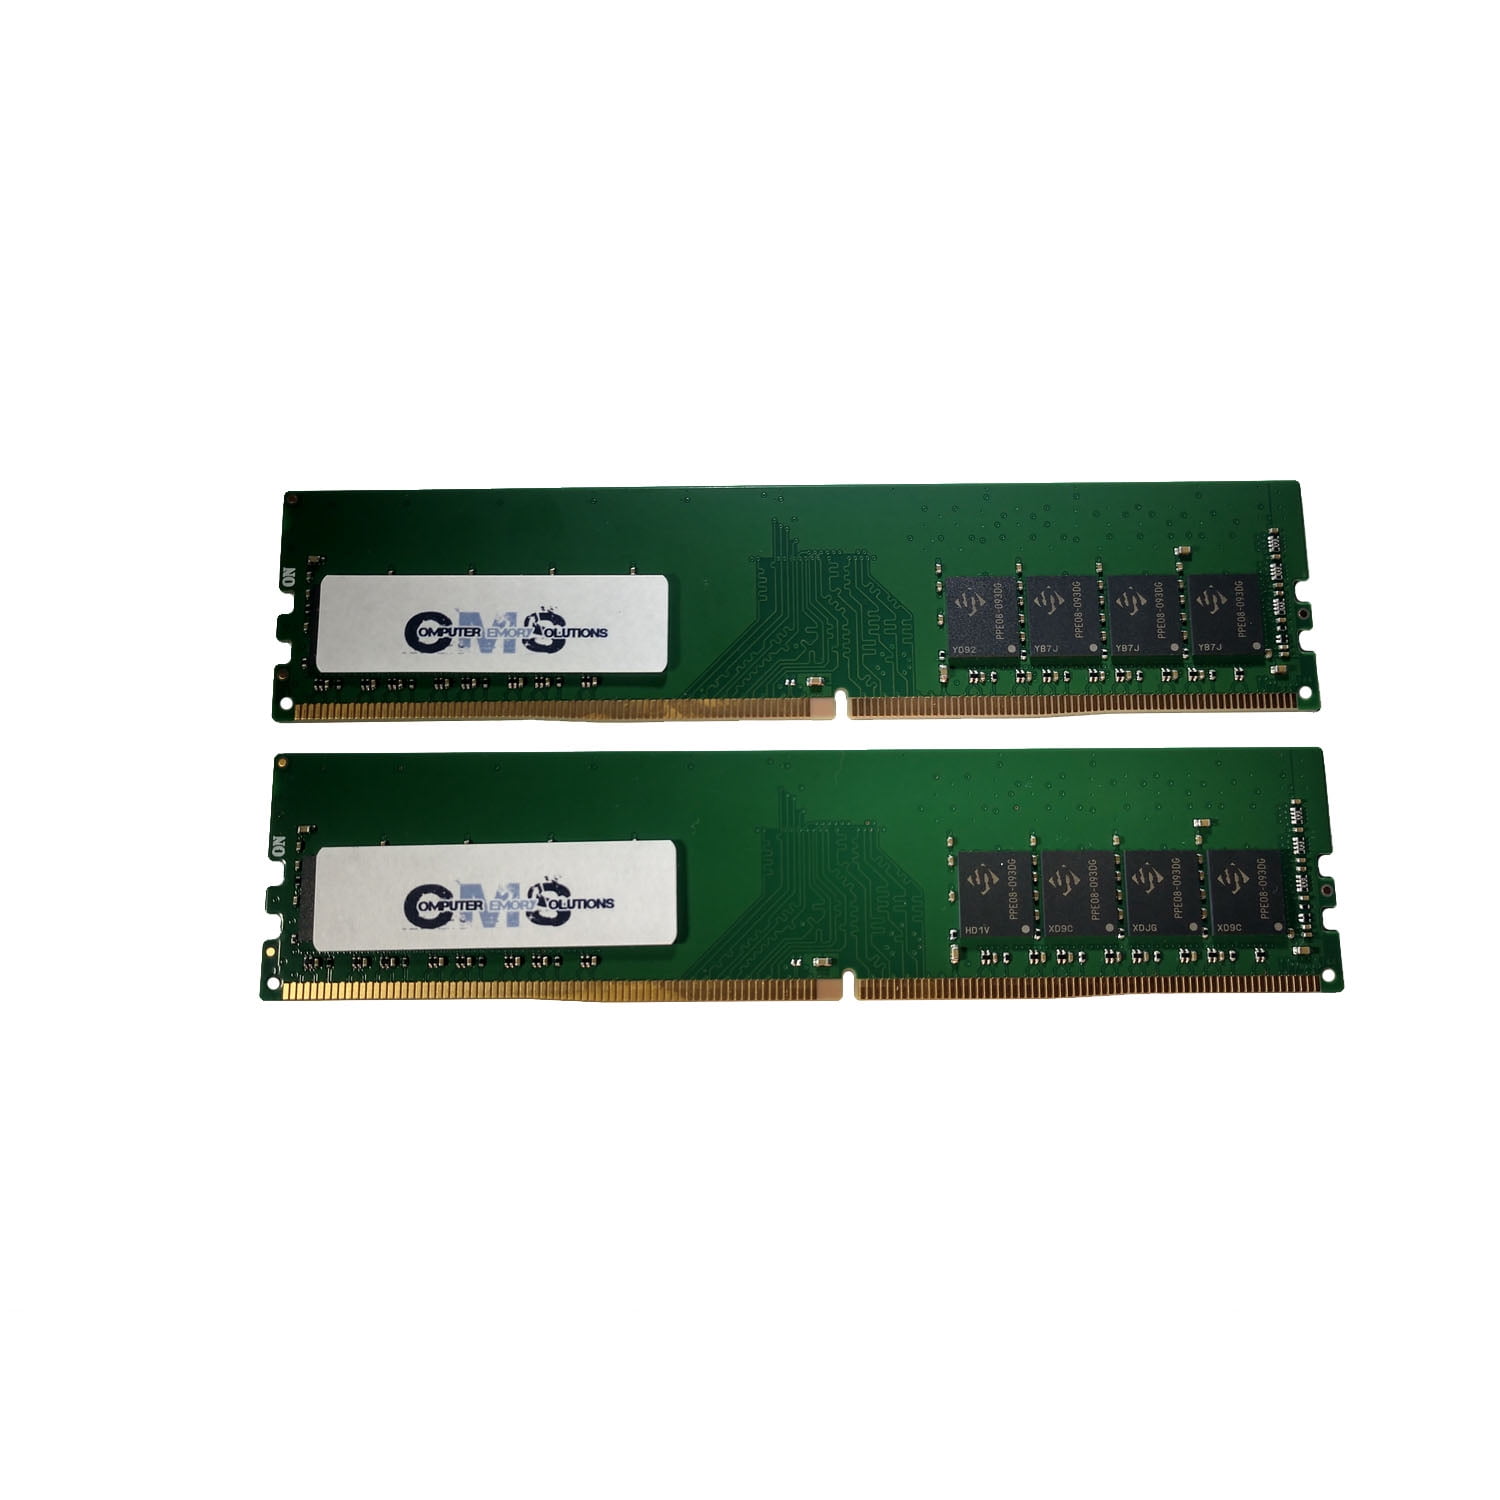 NUC8I3BEH by CMS C105 NUC 4GB NUC8I5BEH 1X4GB NUC8I5BEK NUC8I3BEK Memory Ram Compatible with Intel Next Unit of Computing 